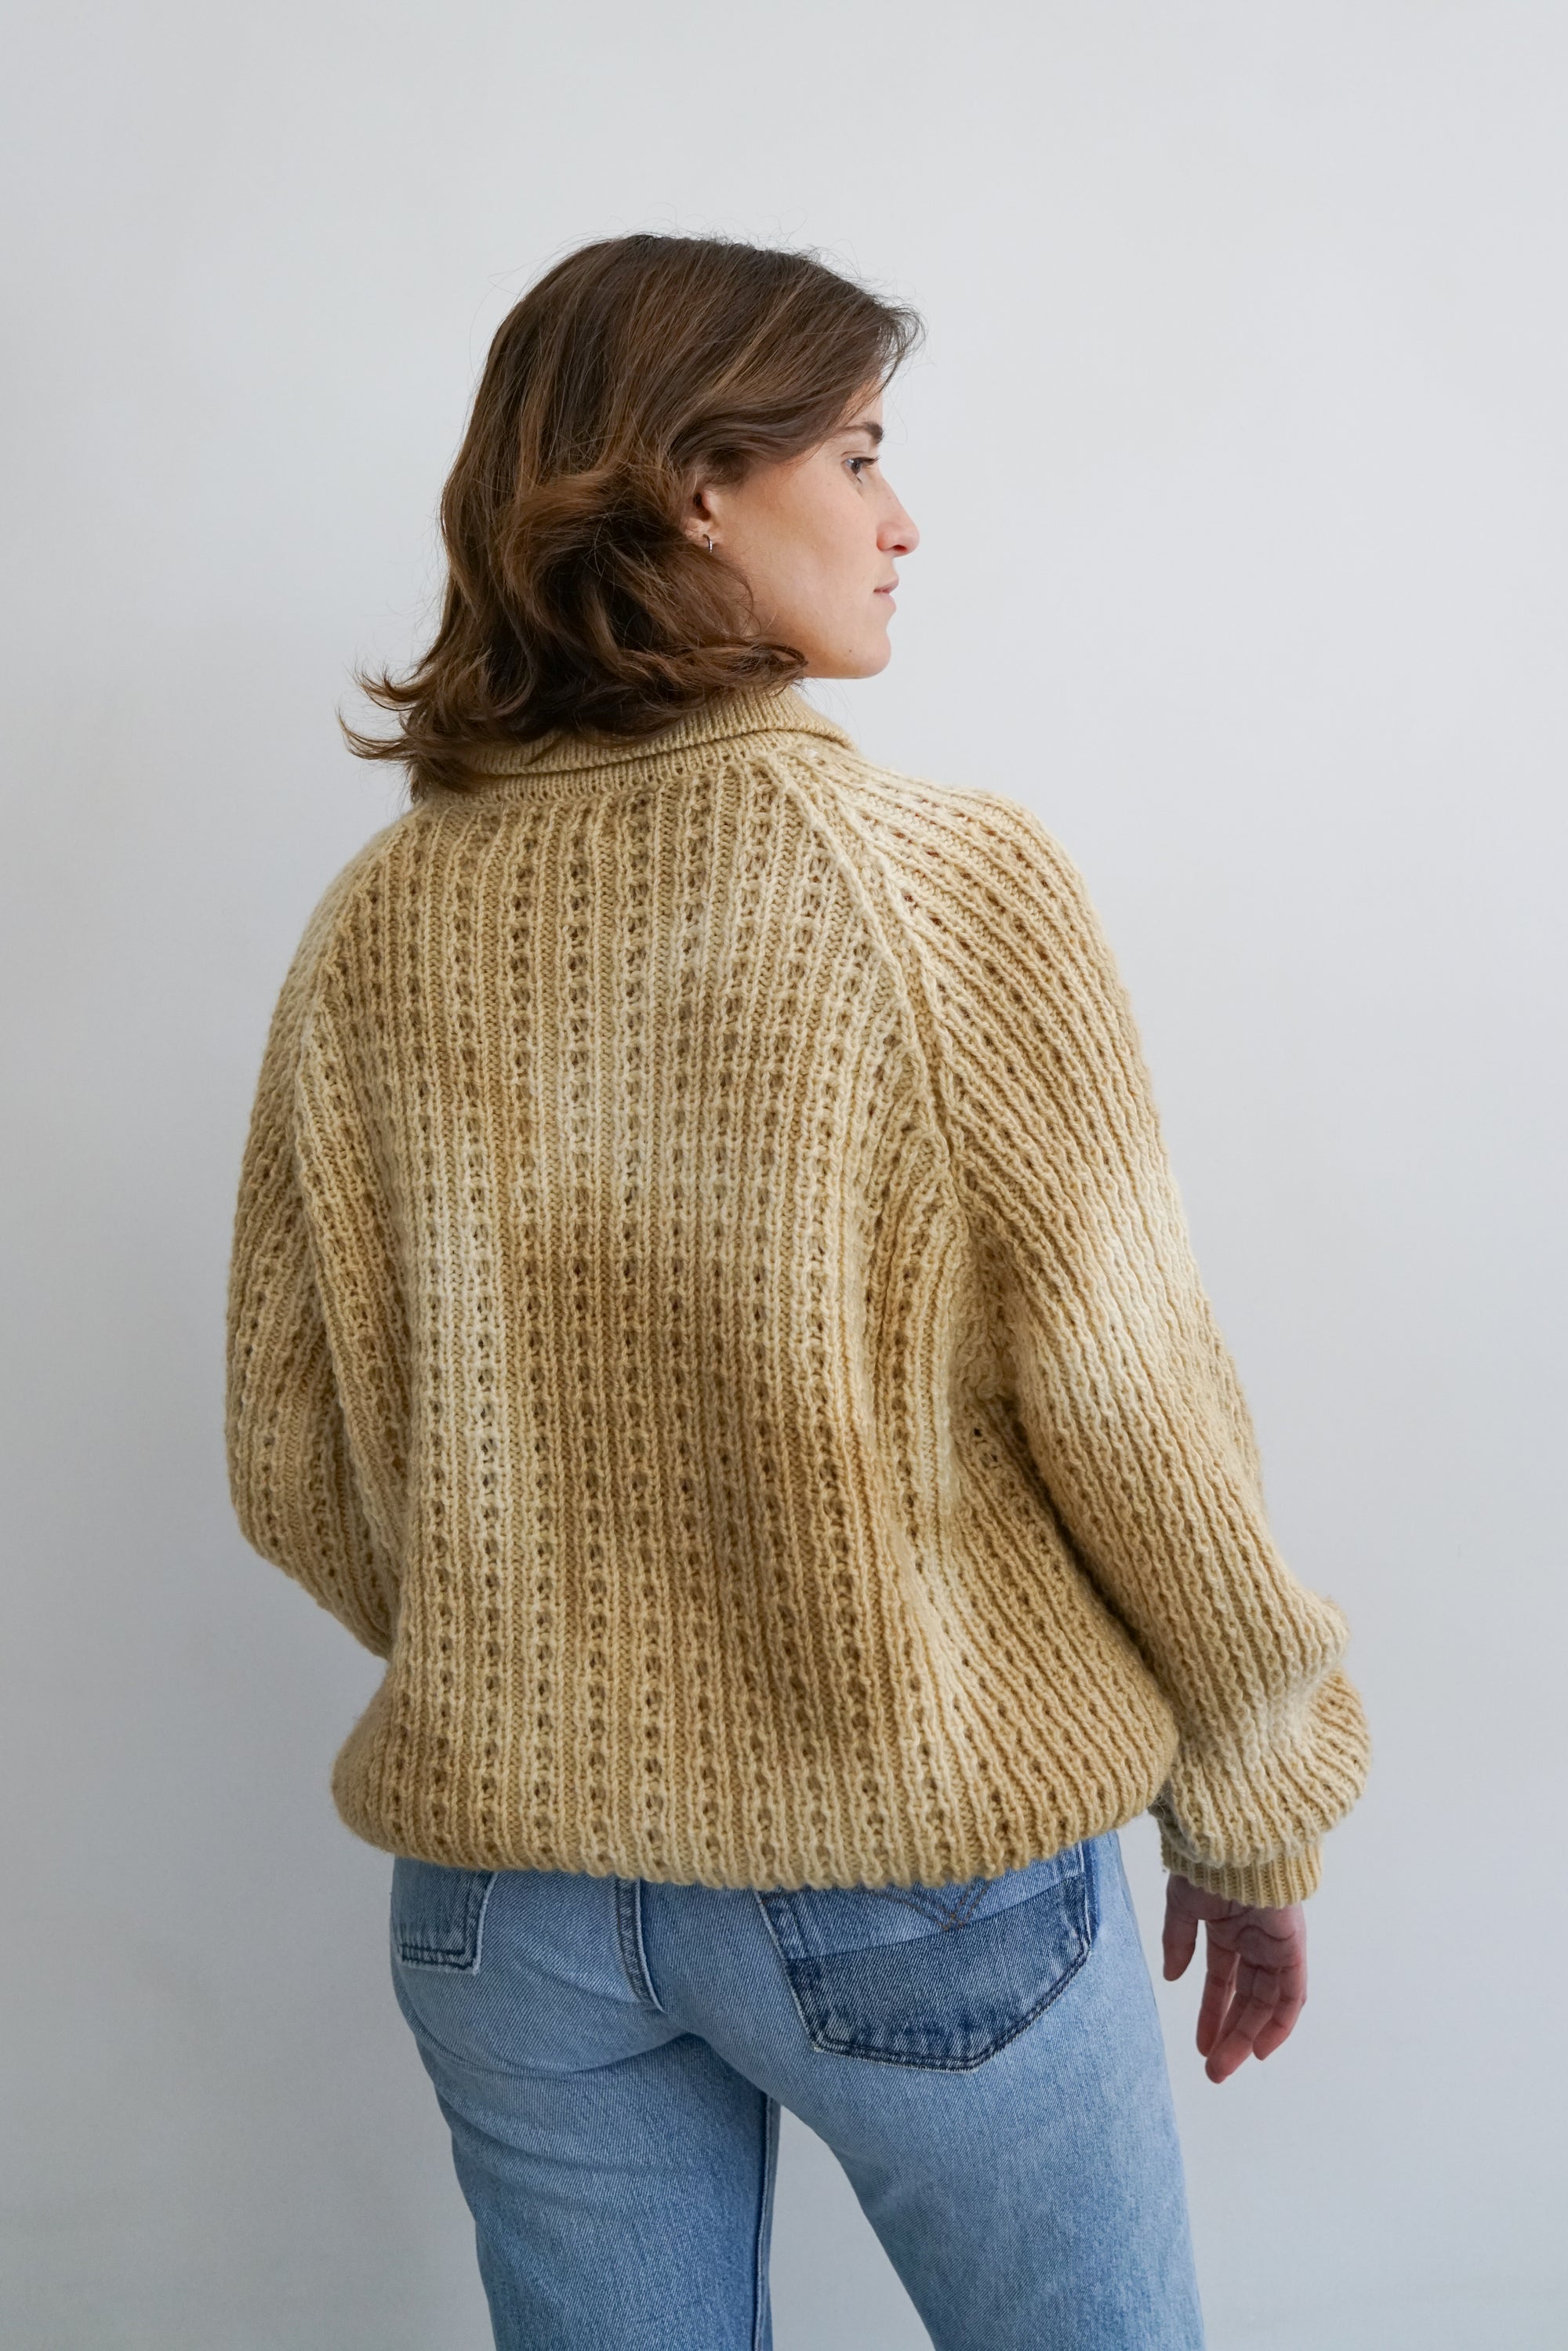 Marigold Dye Vintage Fisherman Knit Sweater